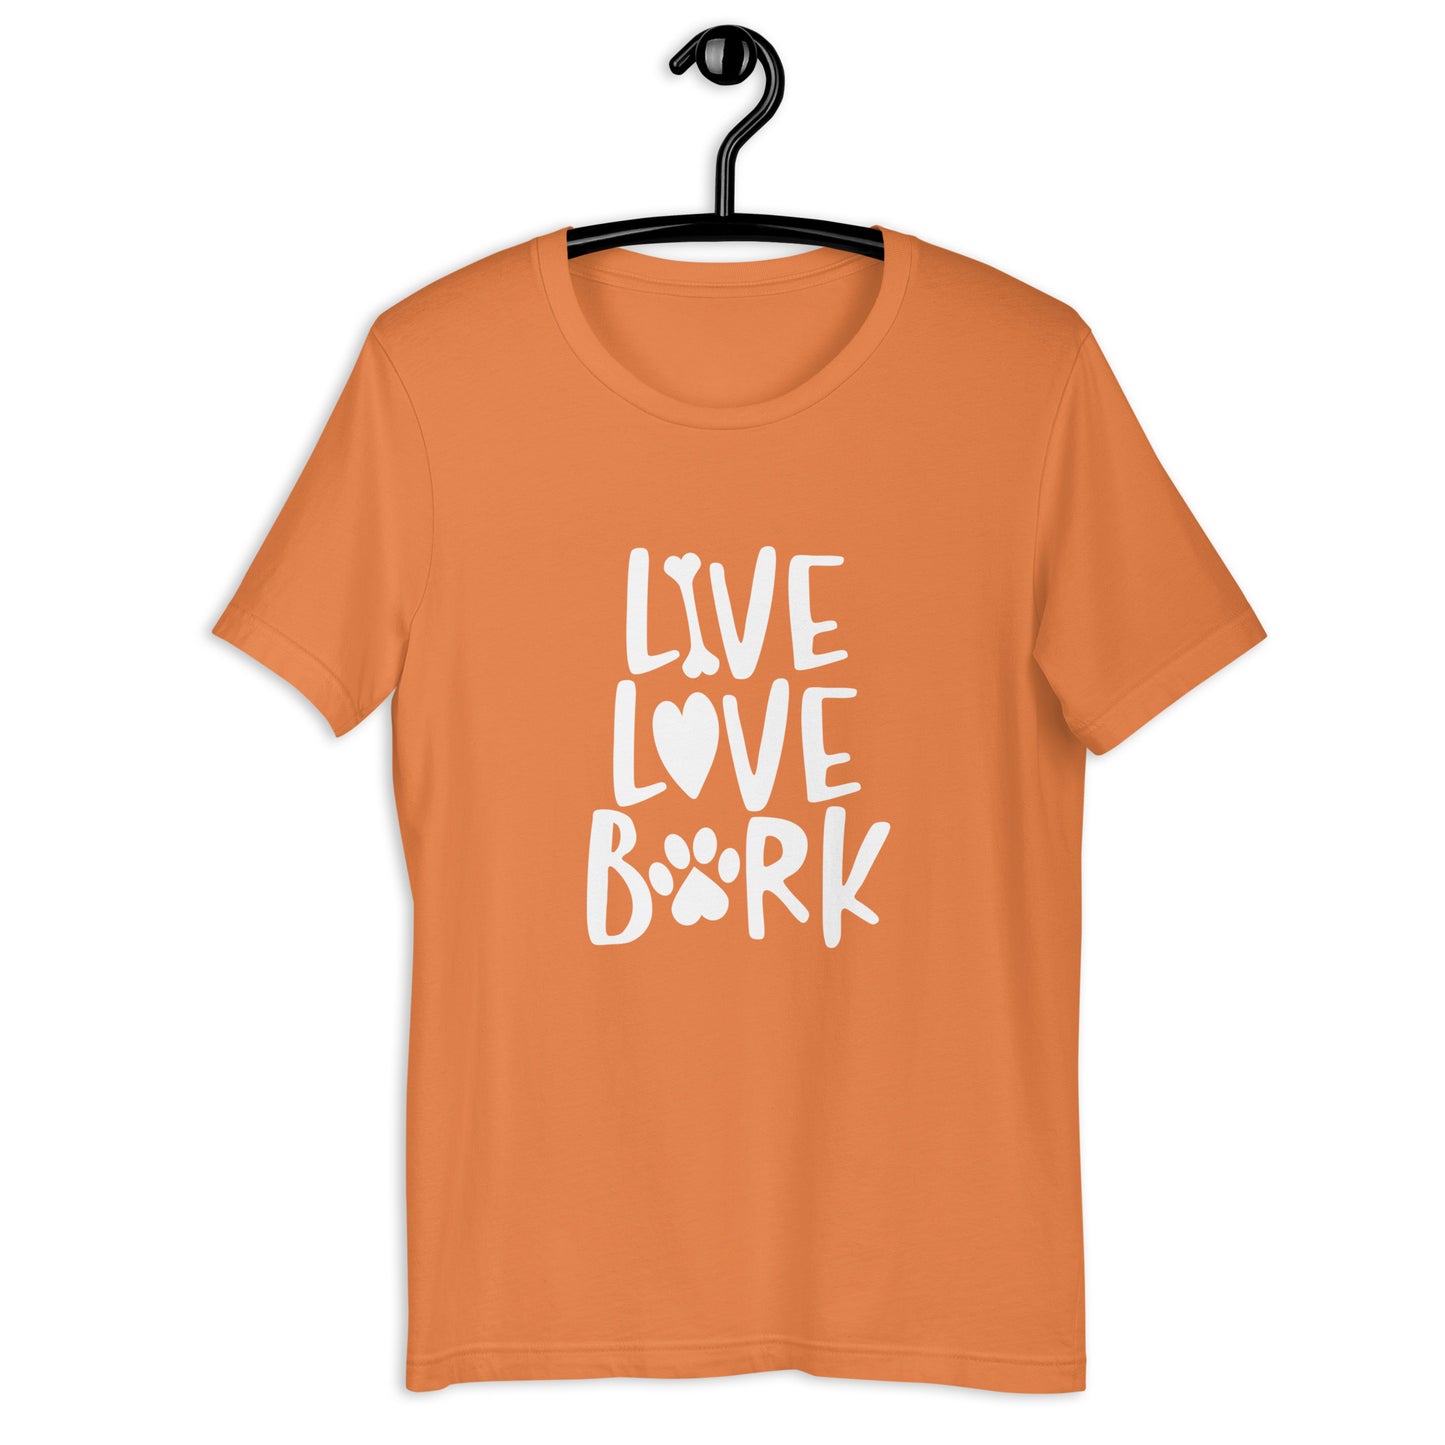 LIVE LOVE BARK - Unisex t-shirt